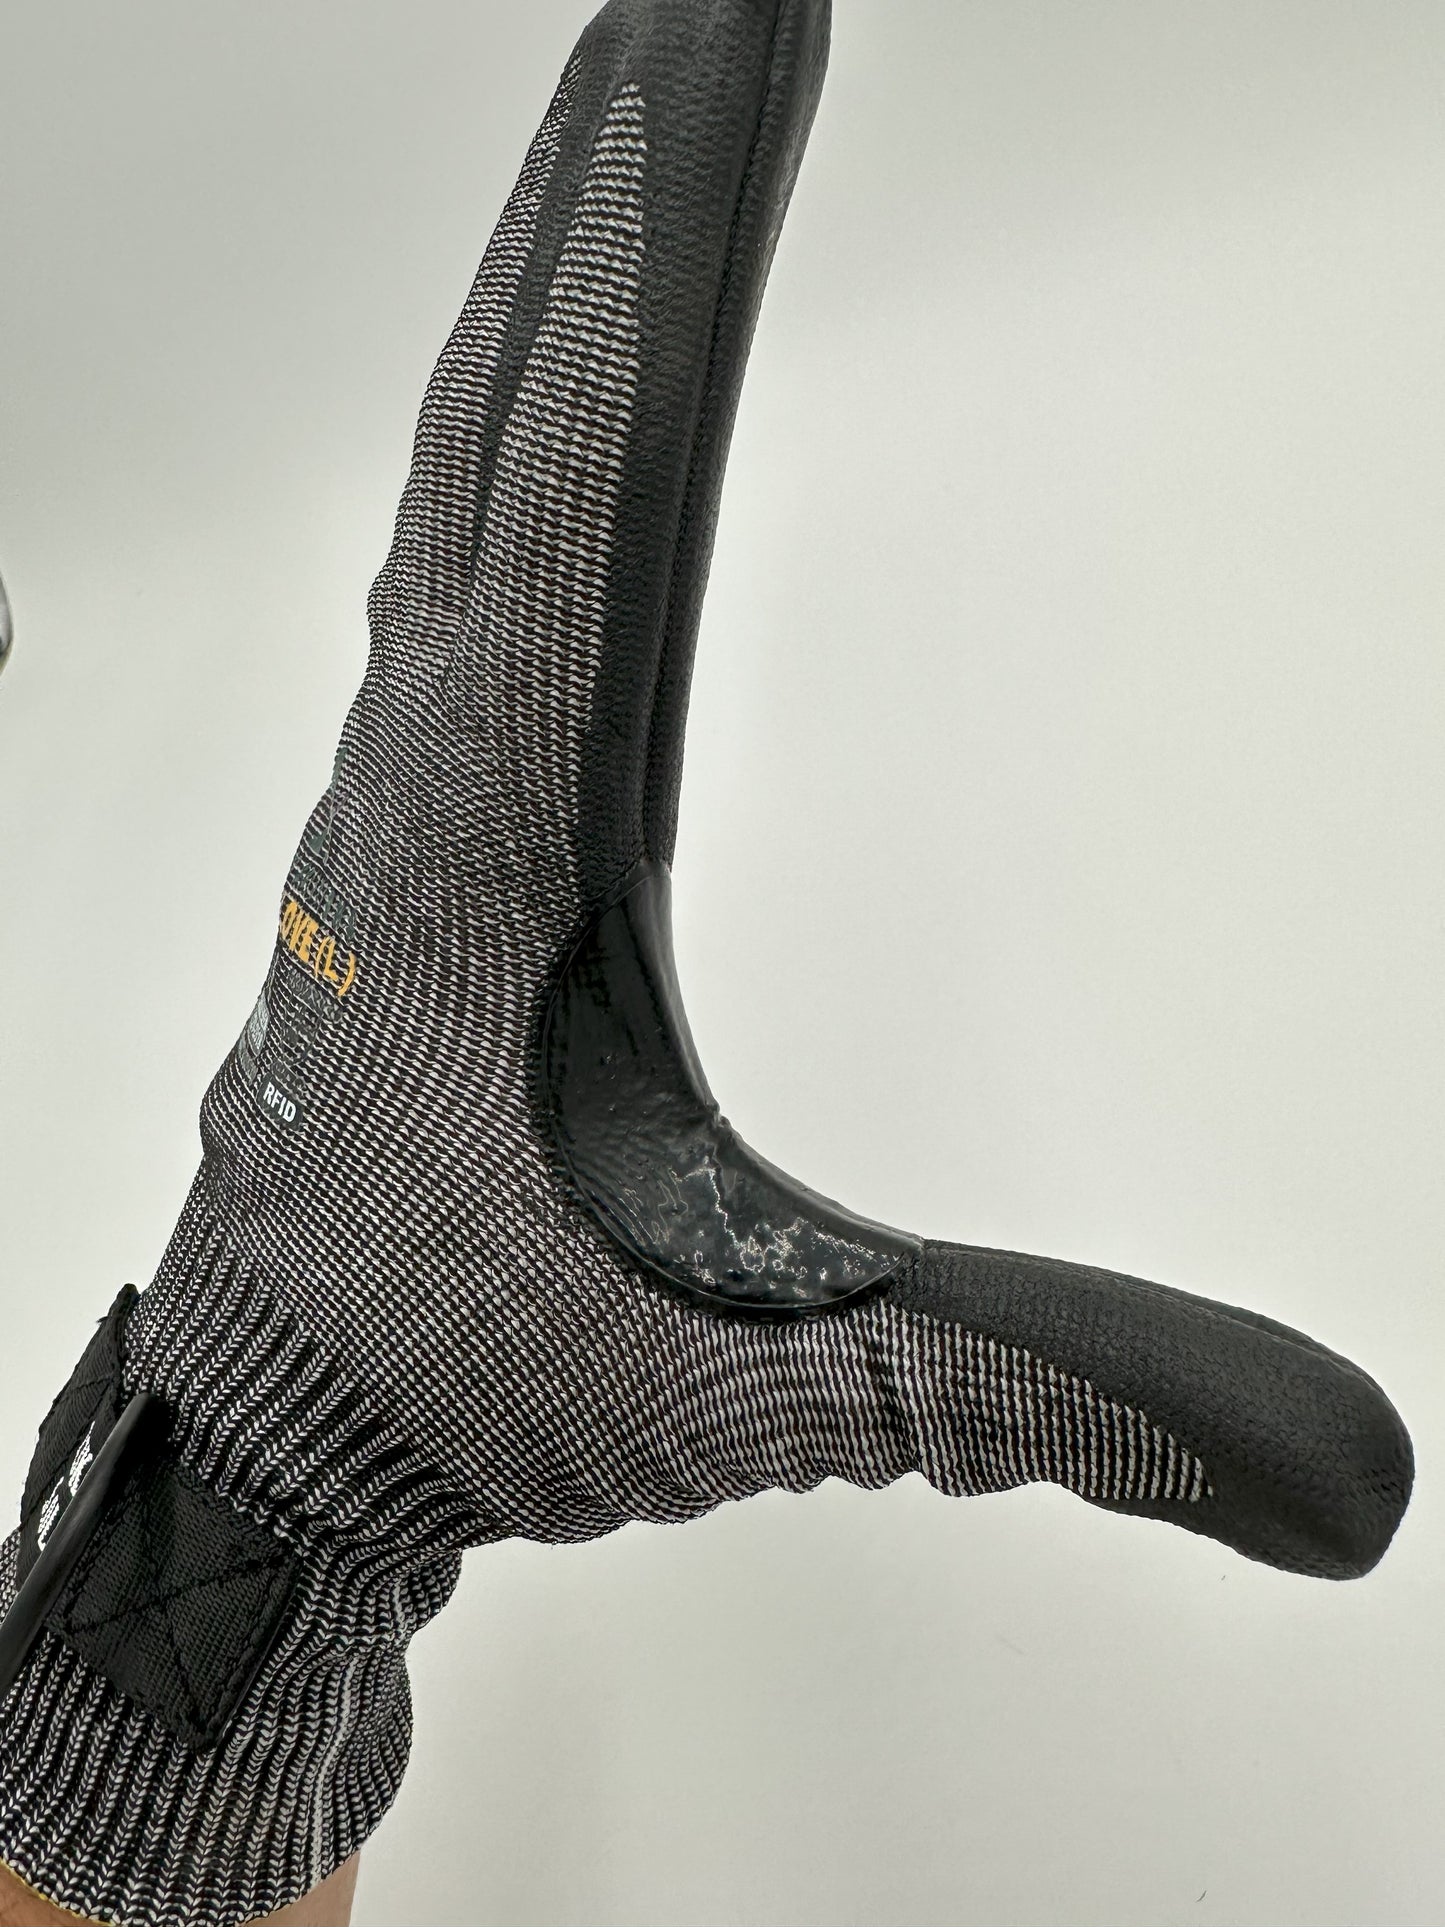 FME Gloves XL